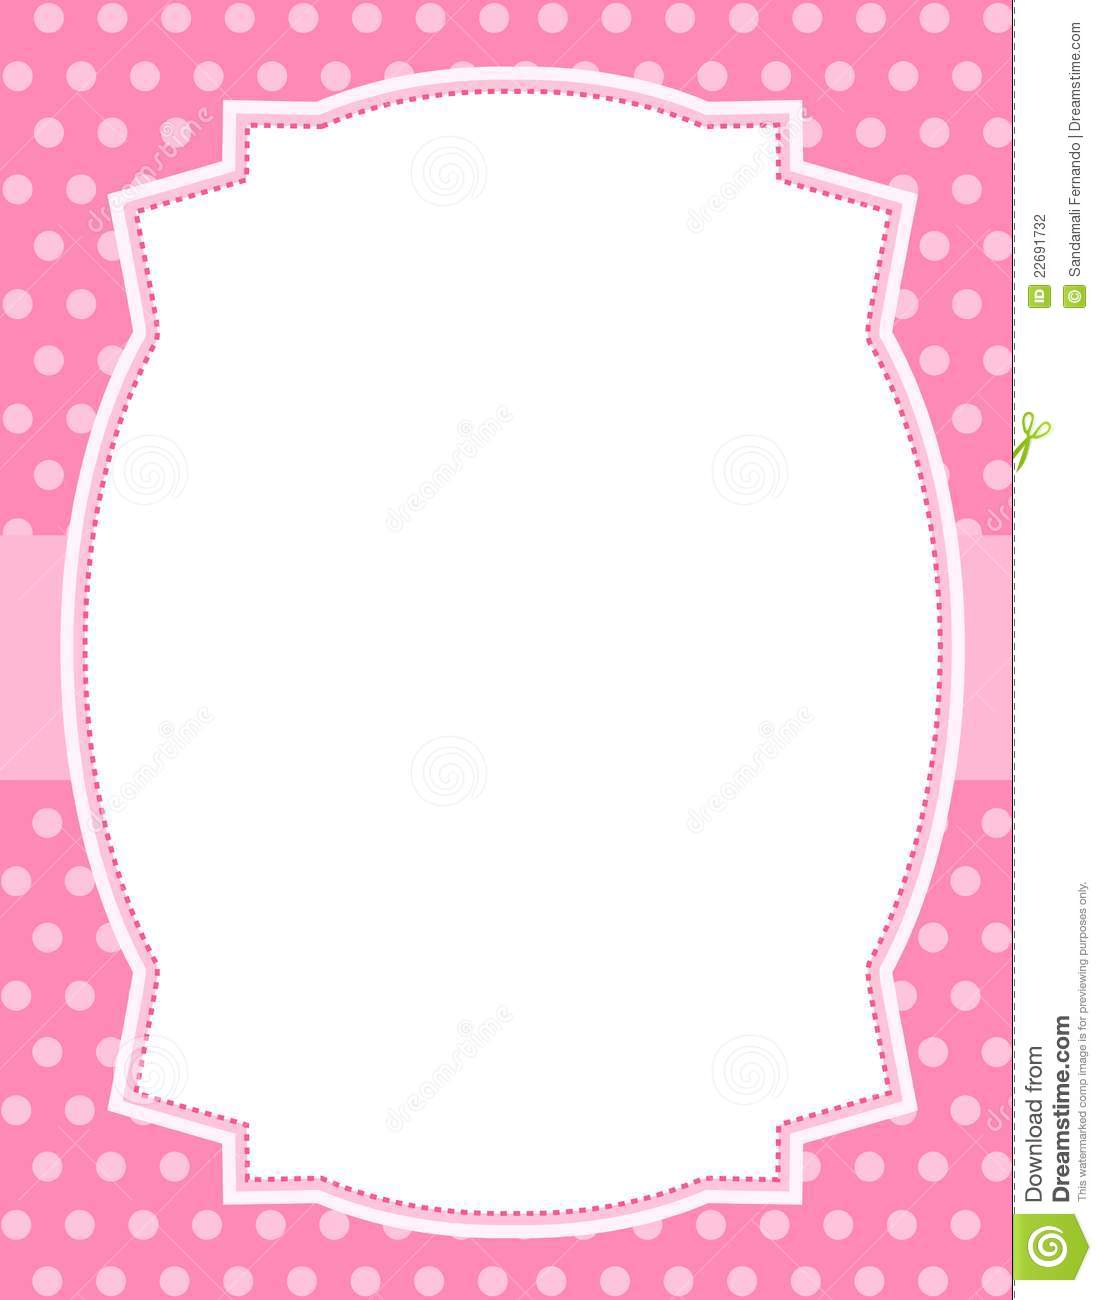 Polka Dot Design With Frame Stock Photography   Image  22691732